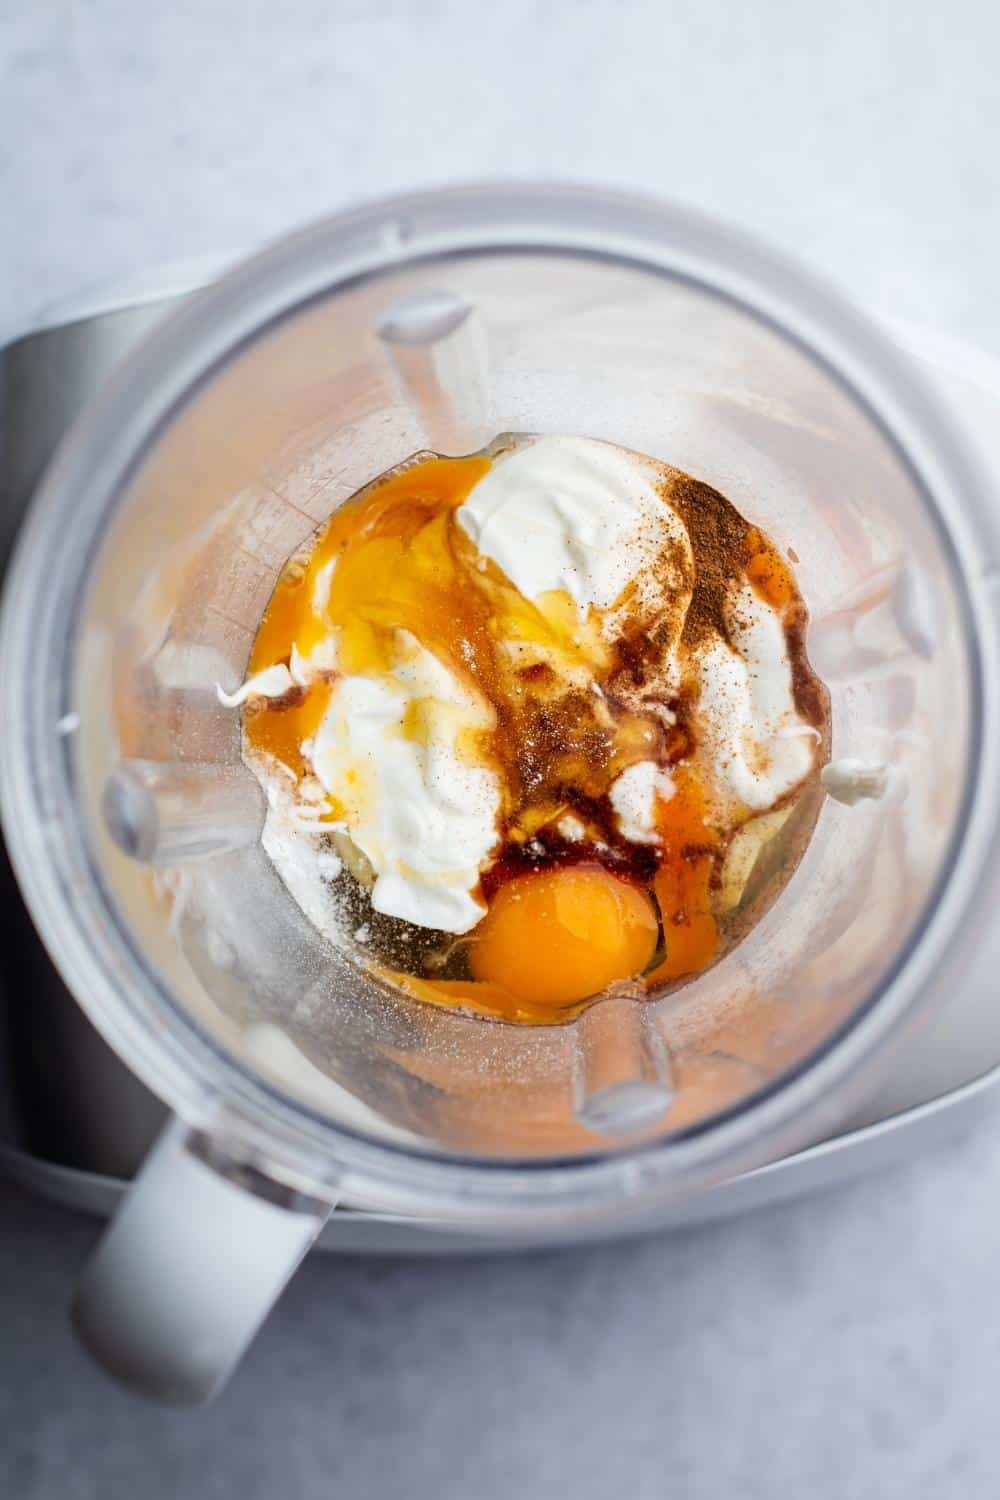 An egg, Greek yogurt, cinnamon, and milk in a blender.